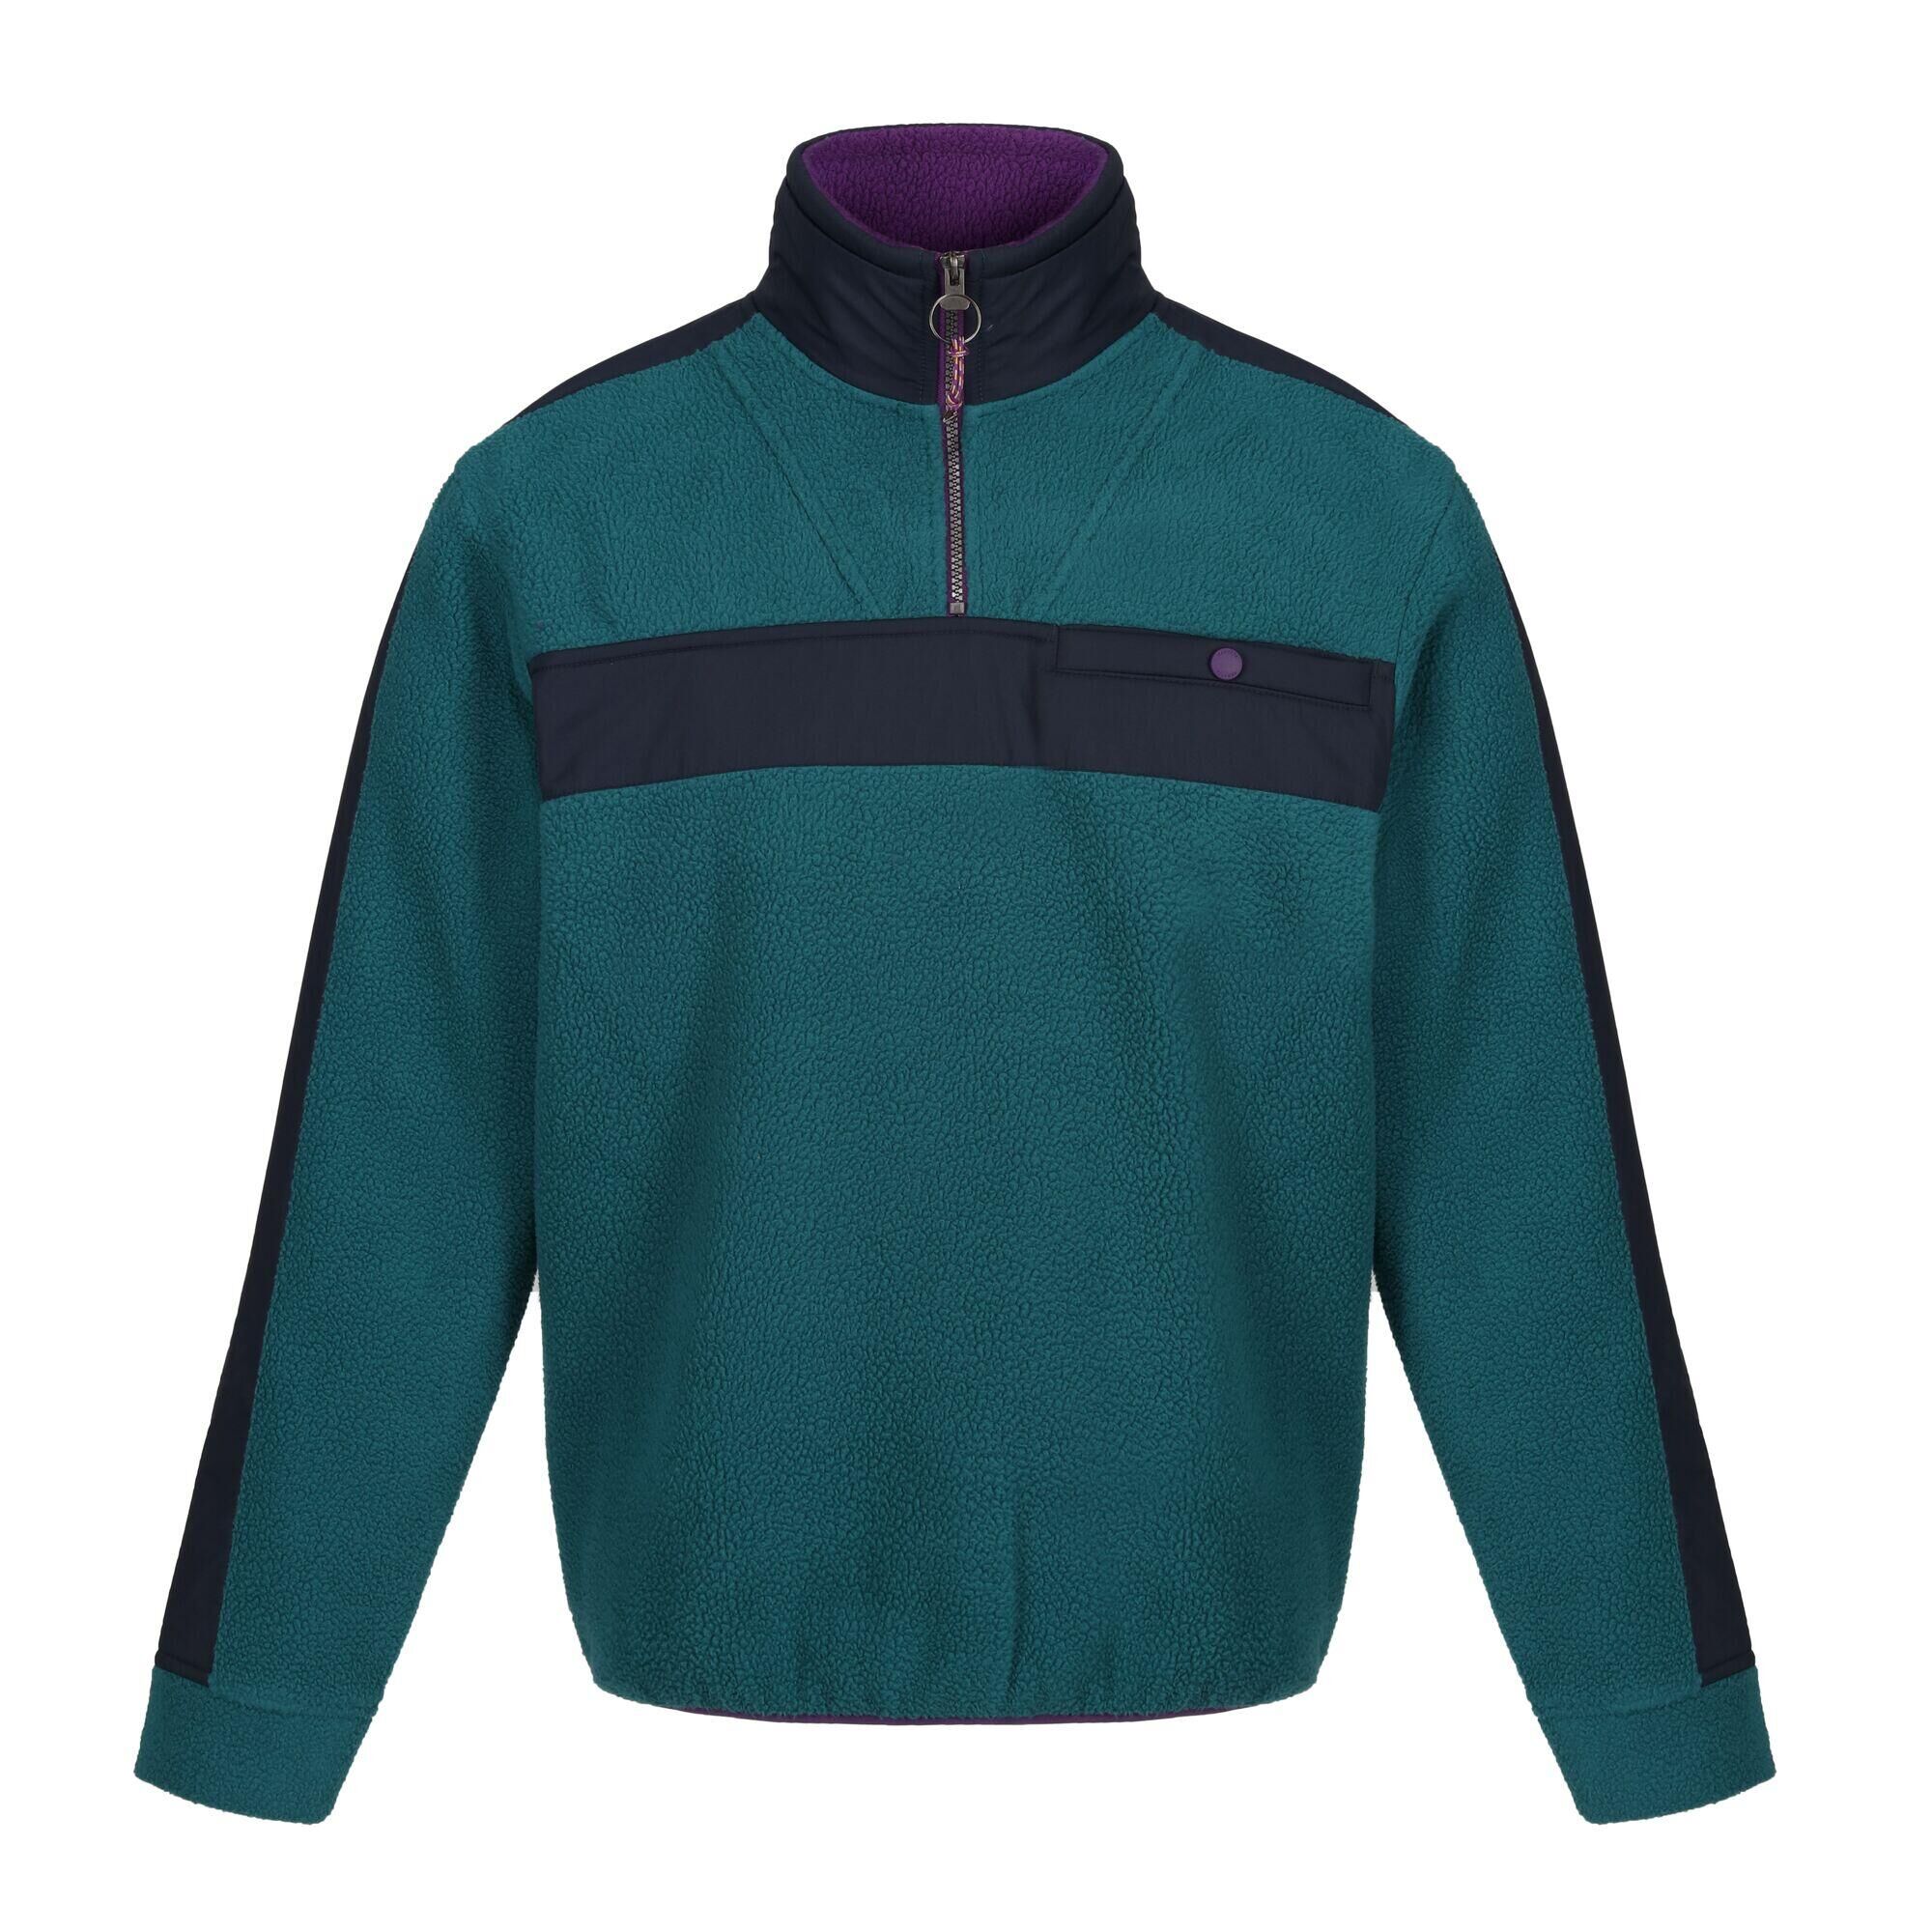 Kalenji Decathlon Men’s Sweater Black Gray 1/4 Zip Micro-fleece Lined XS 